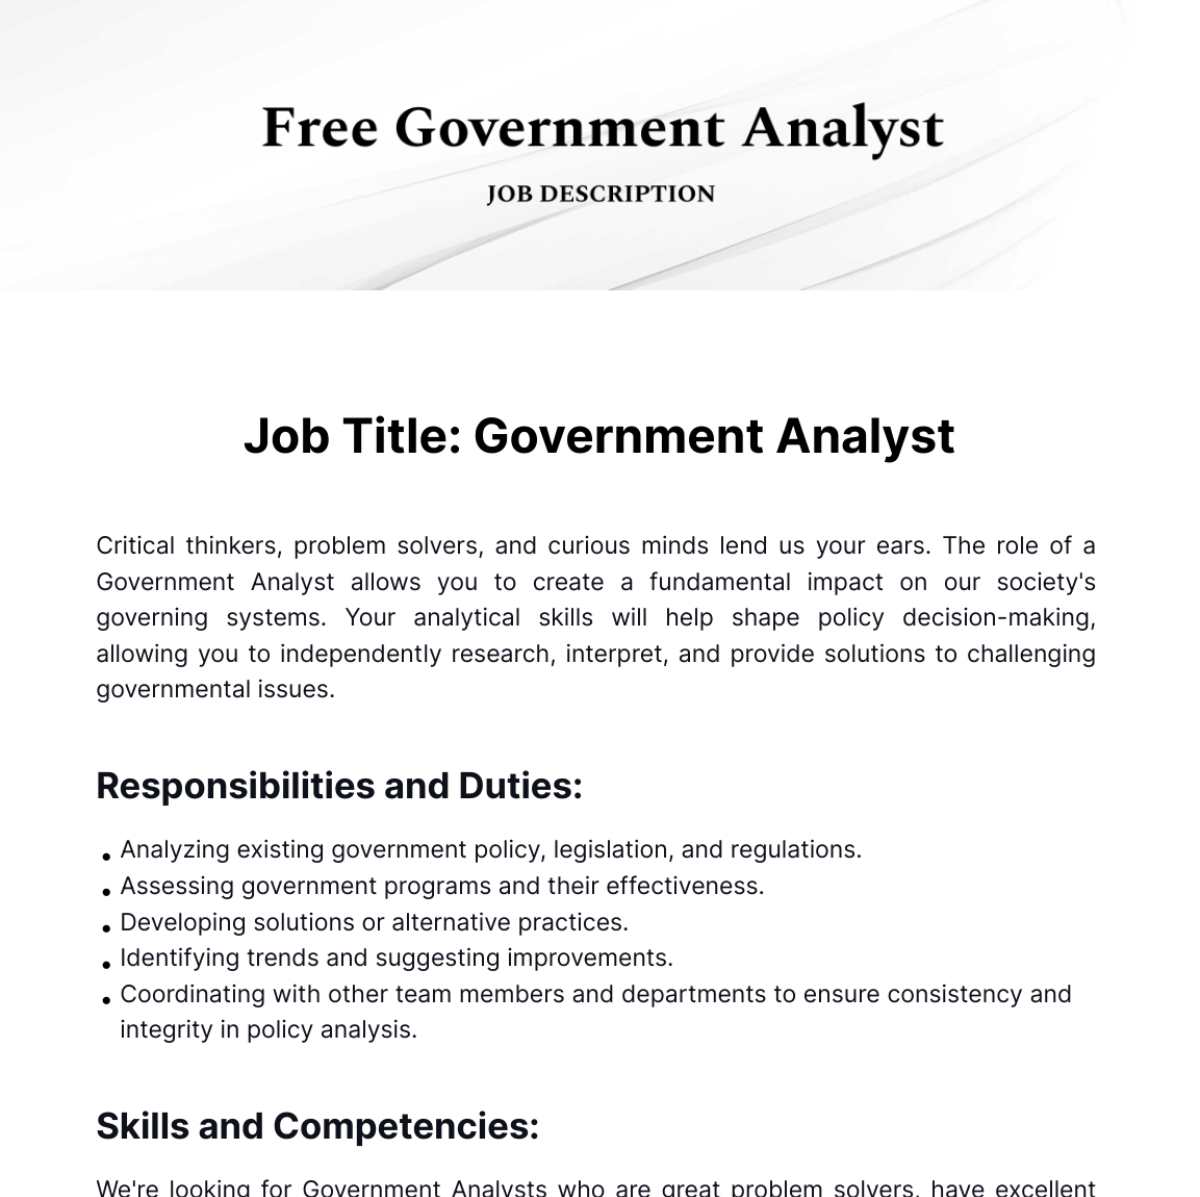 Free Government Analyst Job Description Template